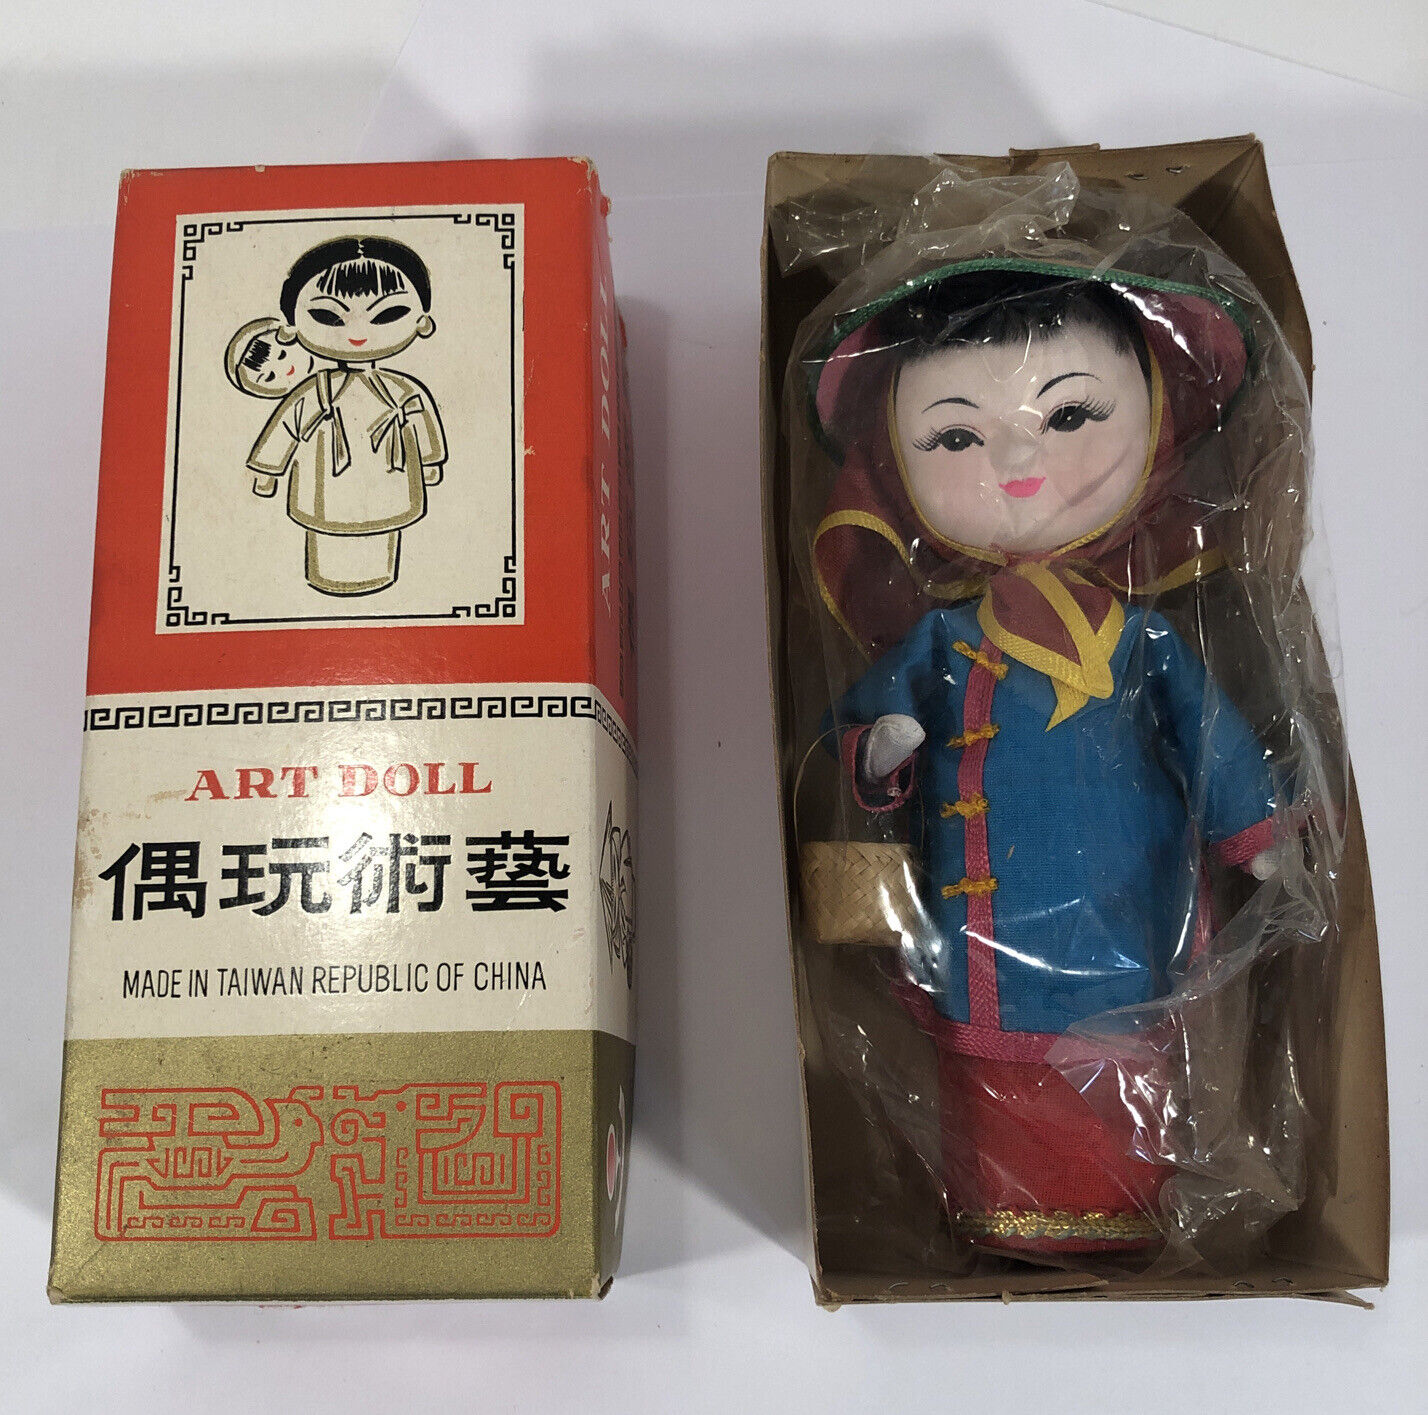 Republic of China, Made in Taiwan Art Doll, YU CHU Brand